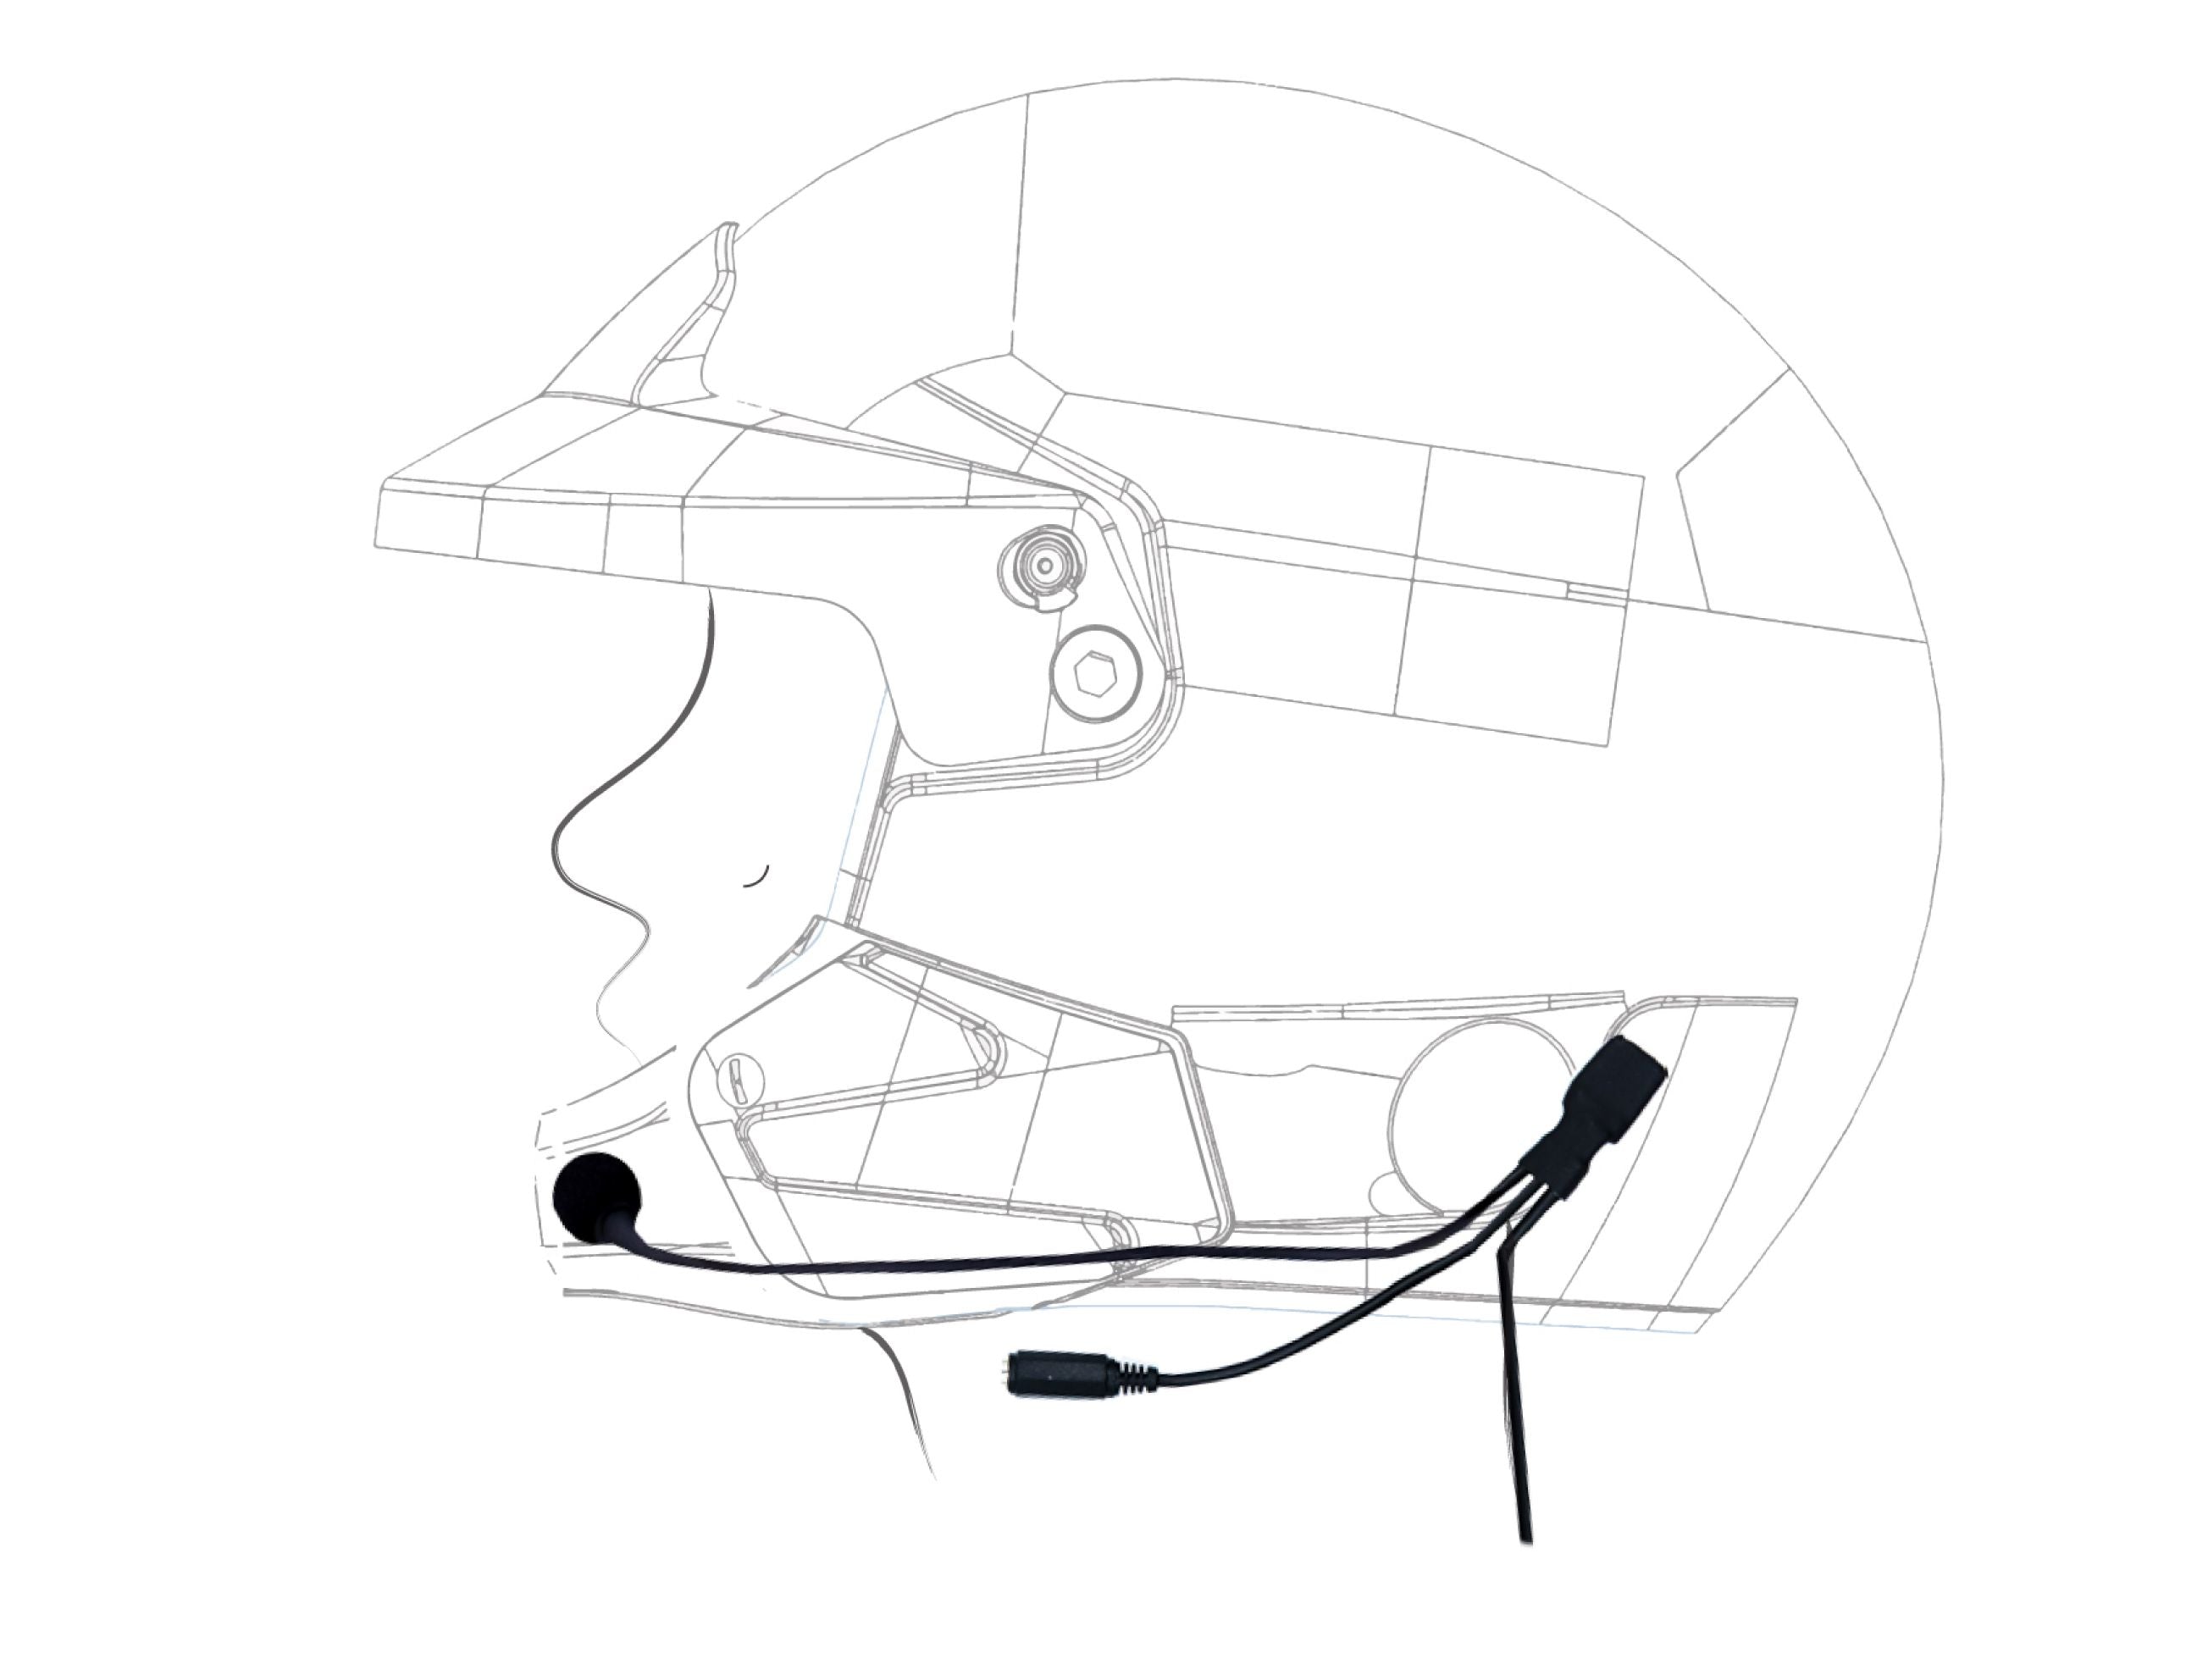 ZERONOISE 6300012 Radio helmet kit for Full Face helmet, Male Nexus 4 PIN, with 3.5mm stereo connector for earplugs Photo-4 